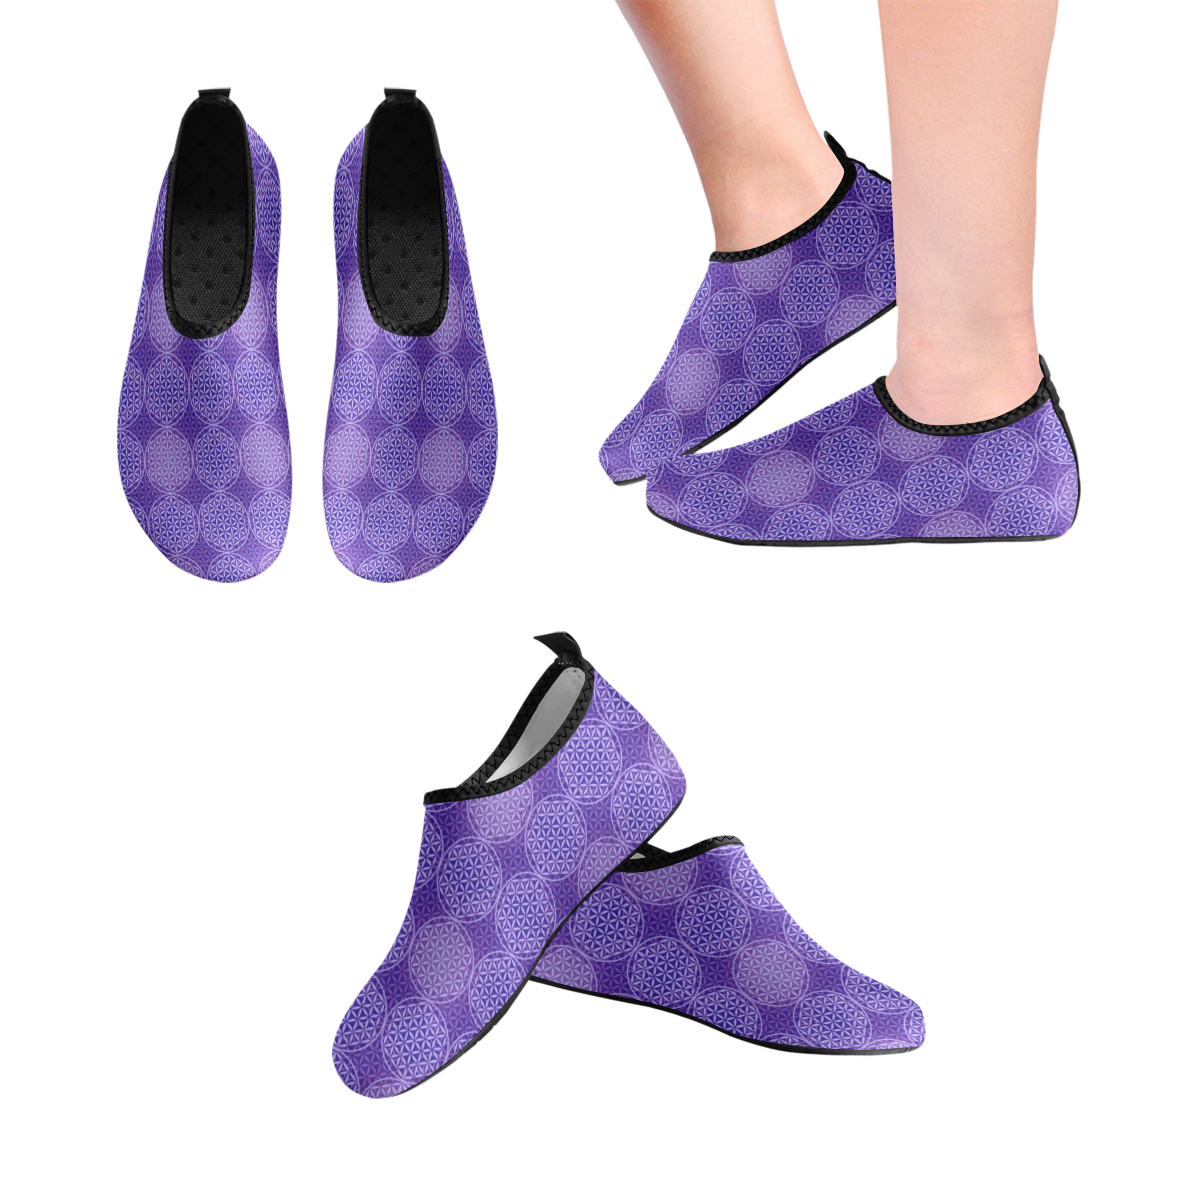 FLOWER OF LIFE stamp pattern purple violet Women's Slip-On Water Shoes (Model 056)